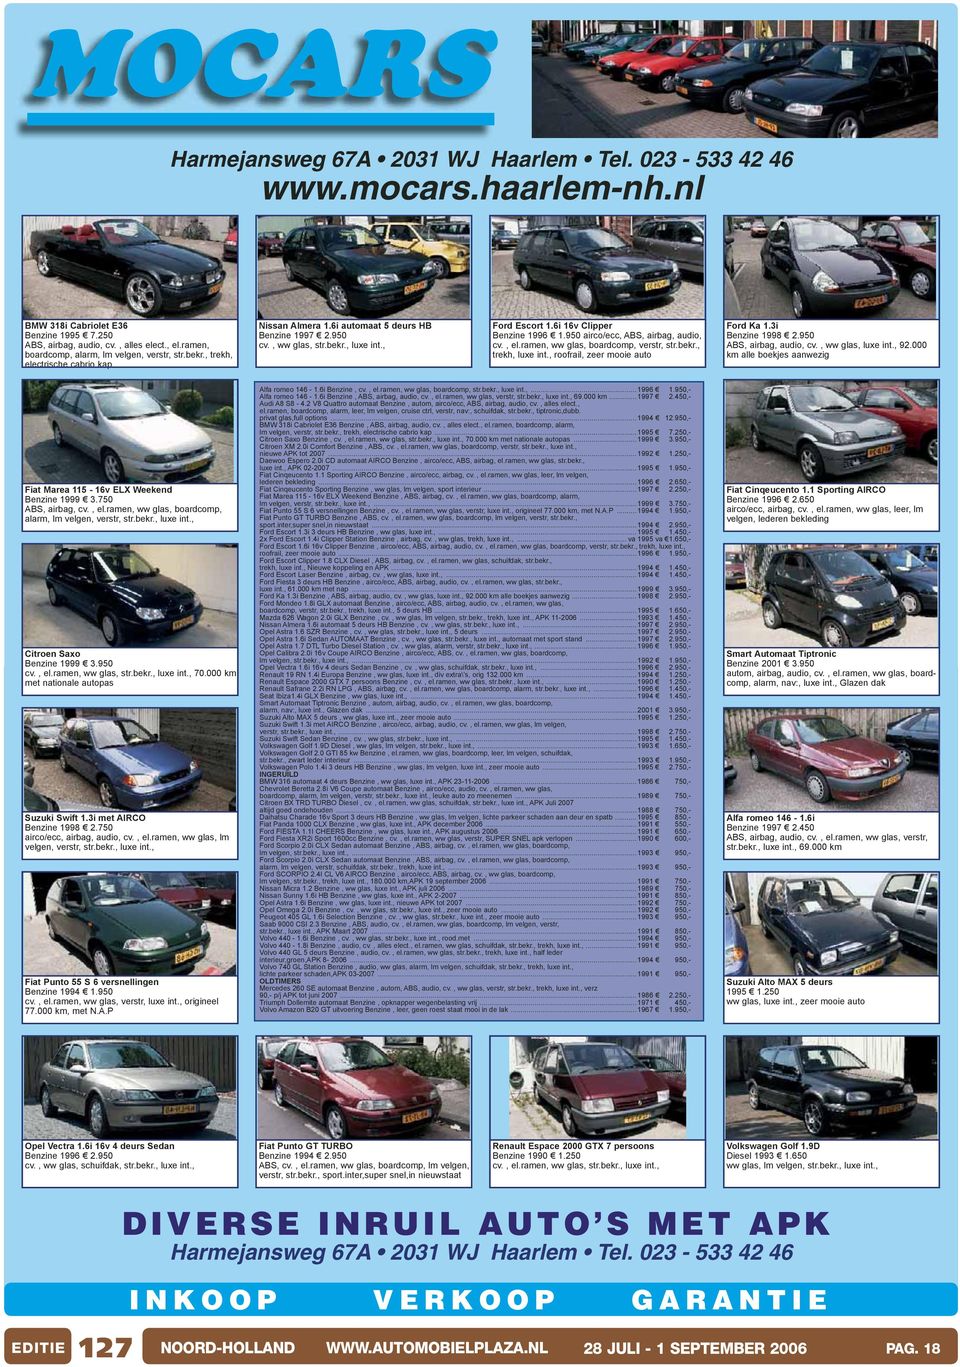 6i 16v Clipper Benzine 1996 1.950 airco/ecc, ABS, airbag, audio, cv., el.ramen, ww glas, boardcomp, verstr, str.bekr., trekh, luxe int., roofrail, zeer mooie auto Ford Ka 1.3i Benzine 1998 2.